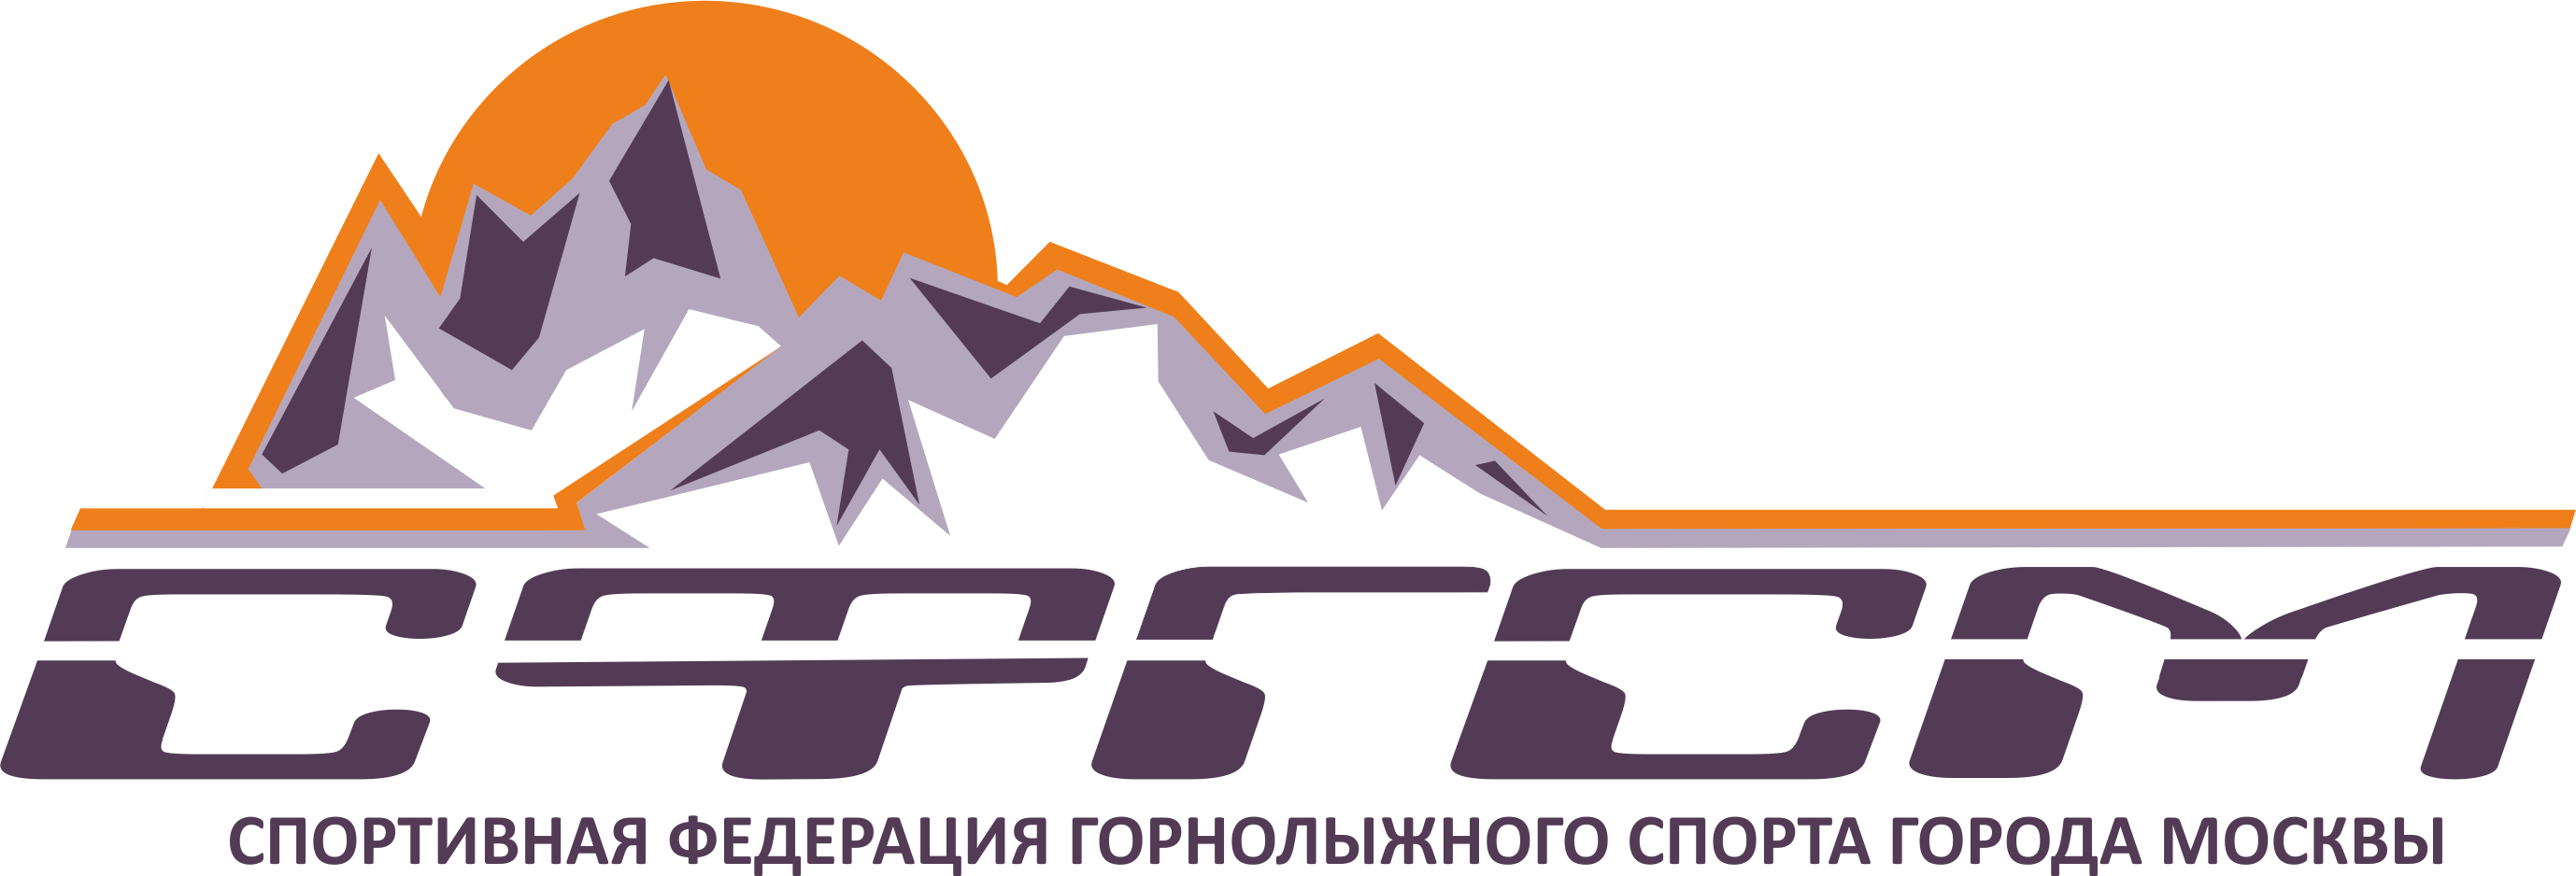 Спортивная федерация москва. Федерация горнолыжного спорта. Федерация горнолыжного спорта логотип. Логотип лыжной секции. Логотипы лыжных компаний.